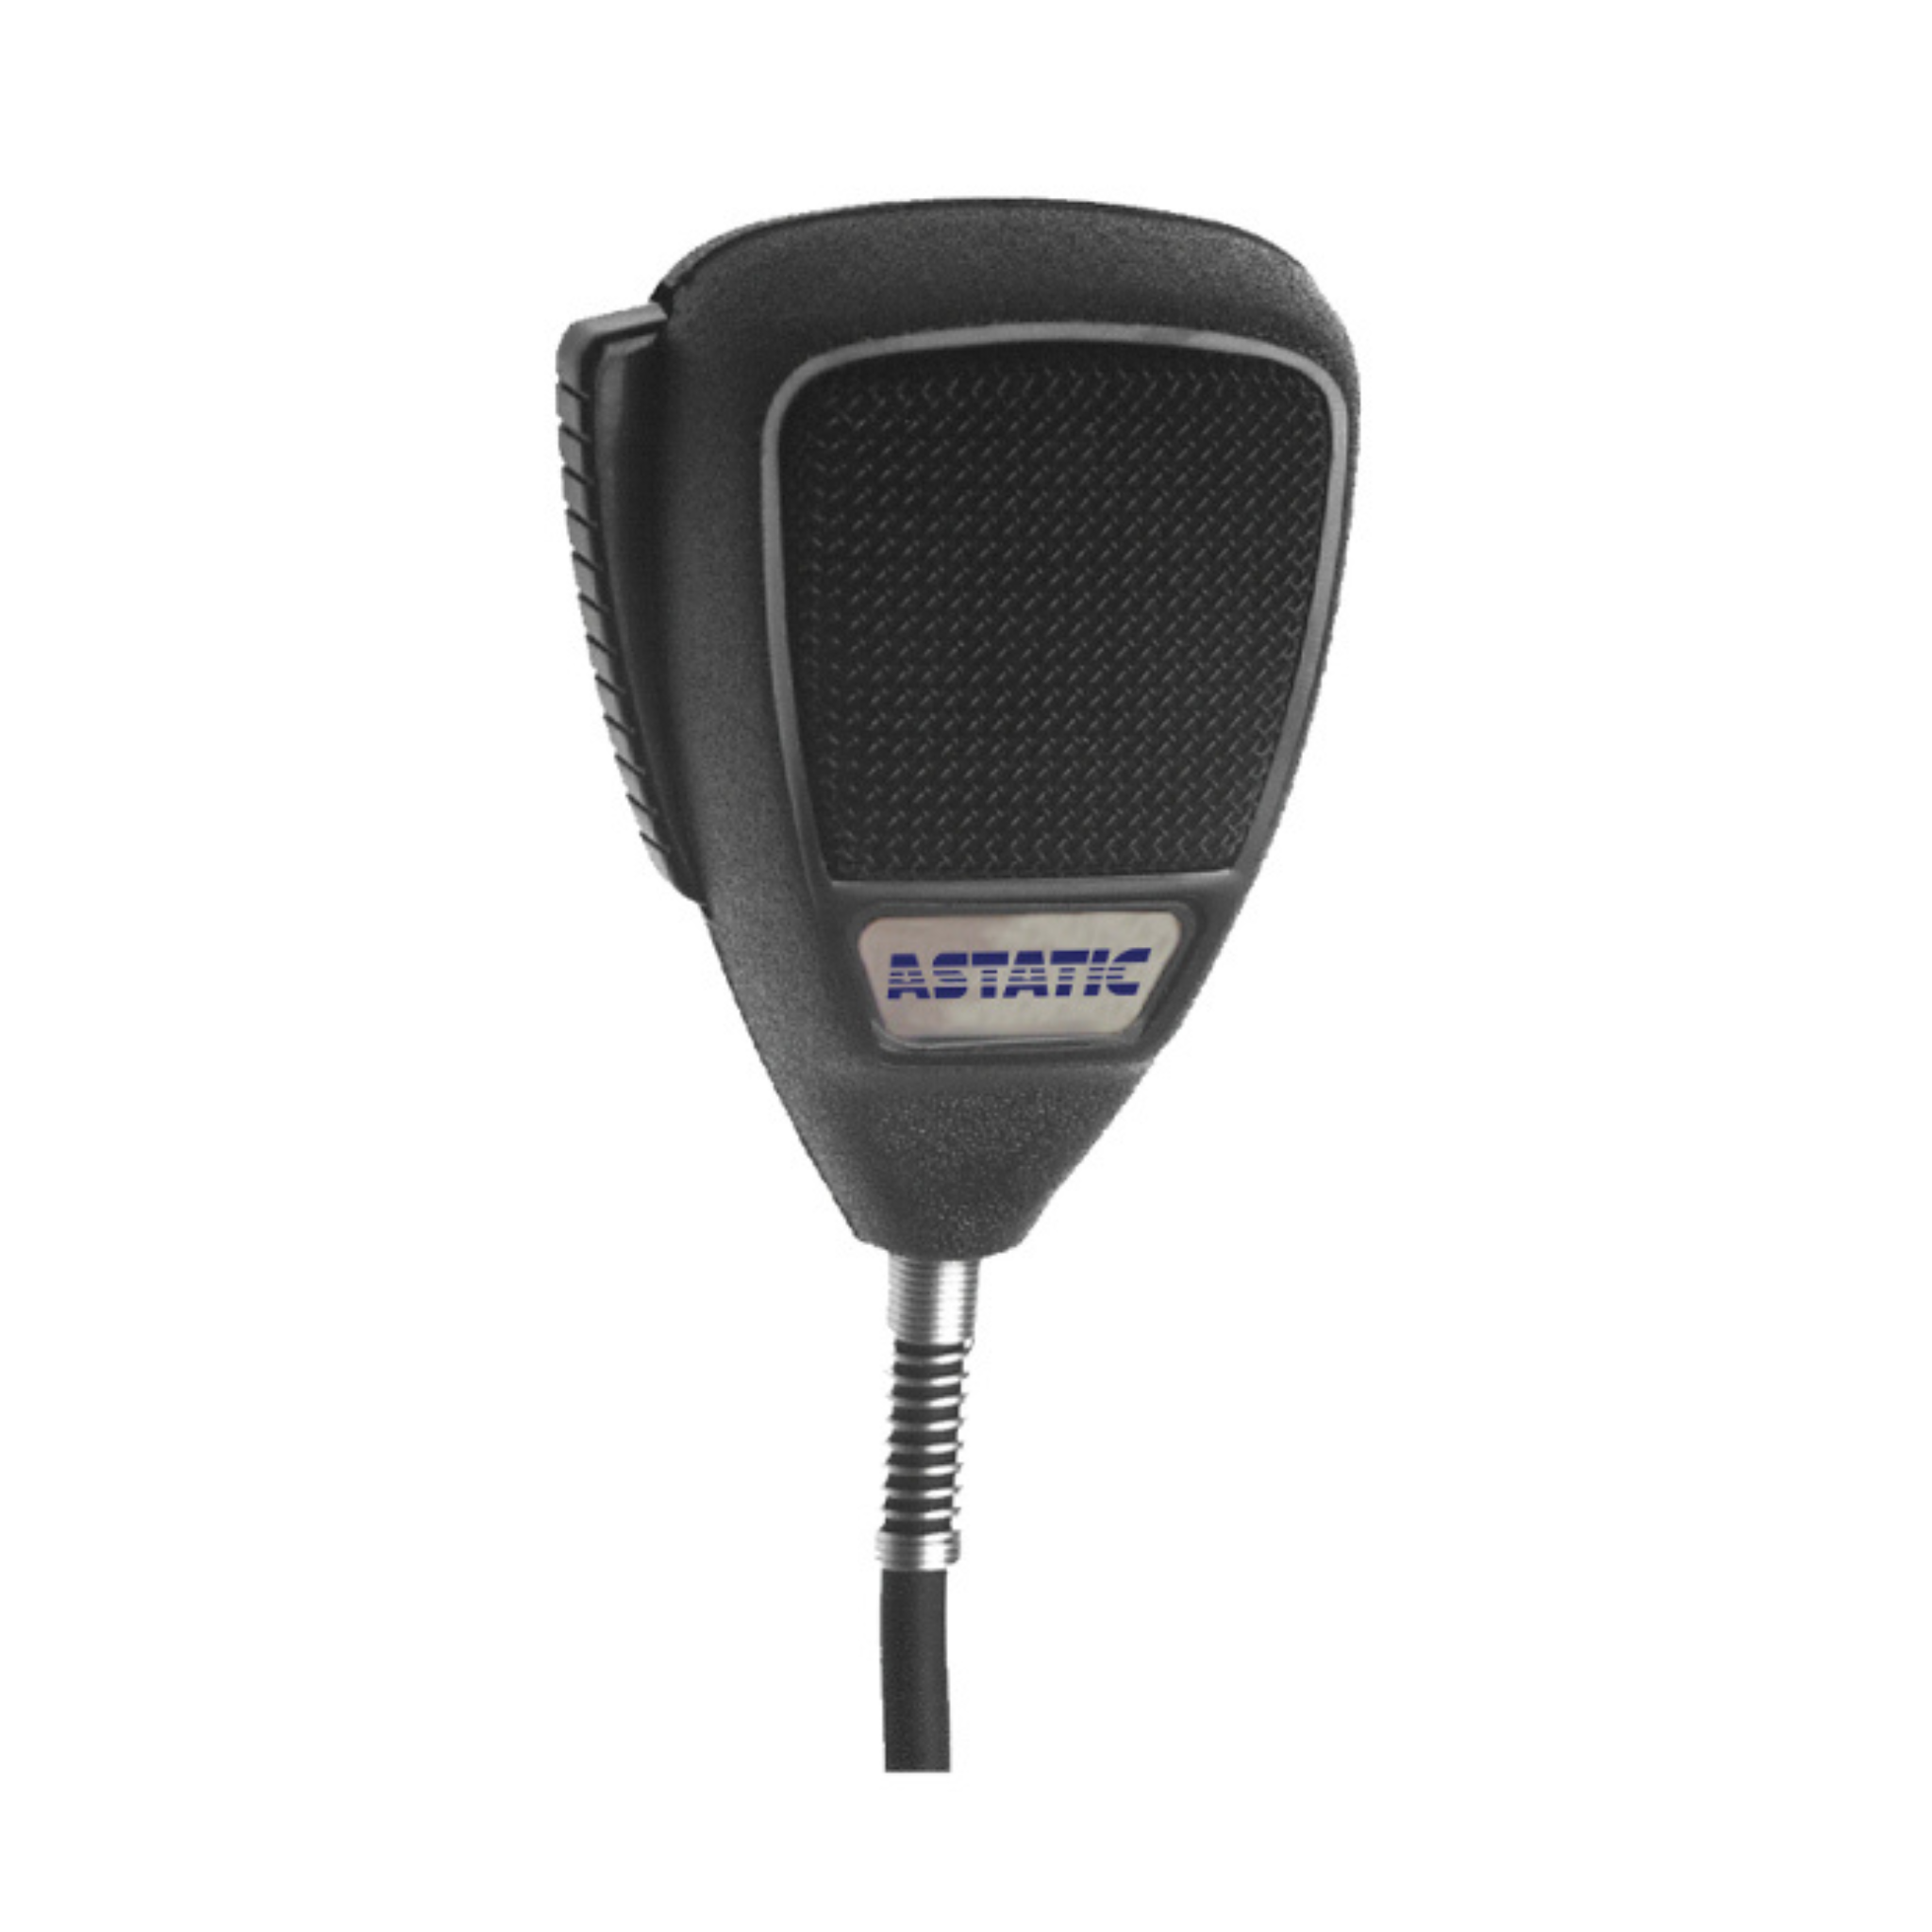 Astatic 611L Palmheld Omnidirectional Dynamic Mircophone